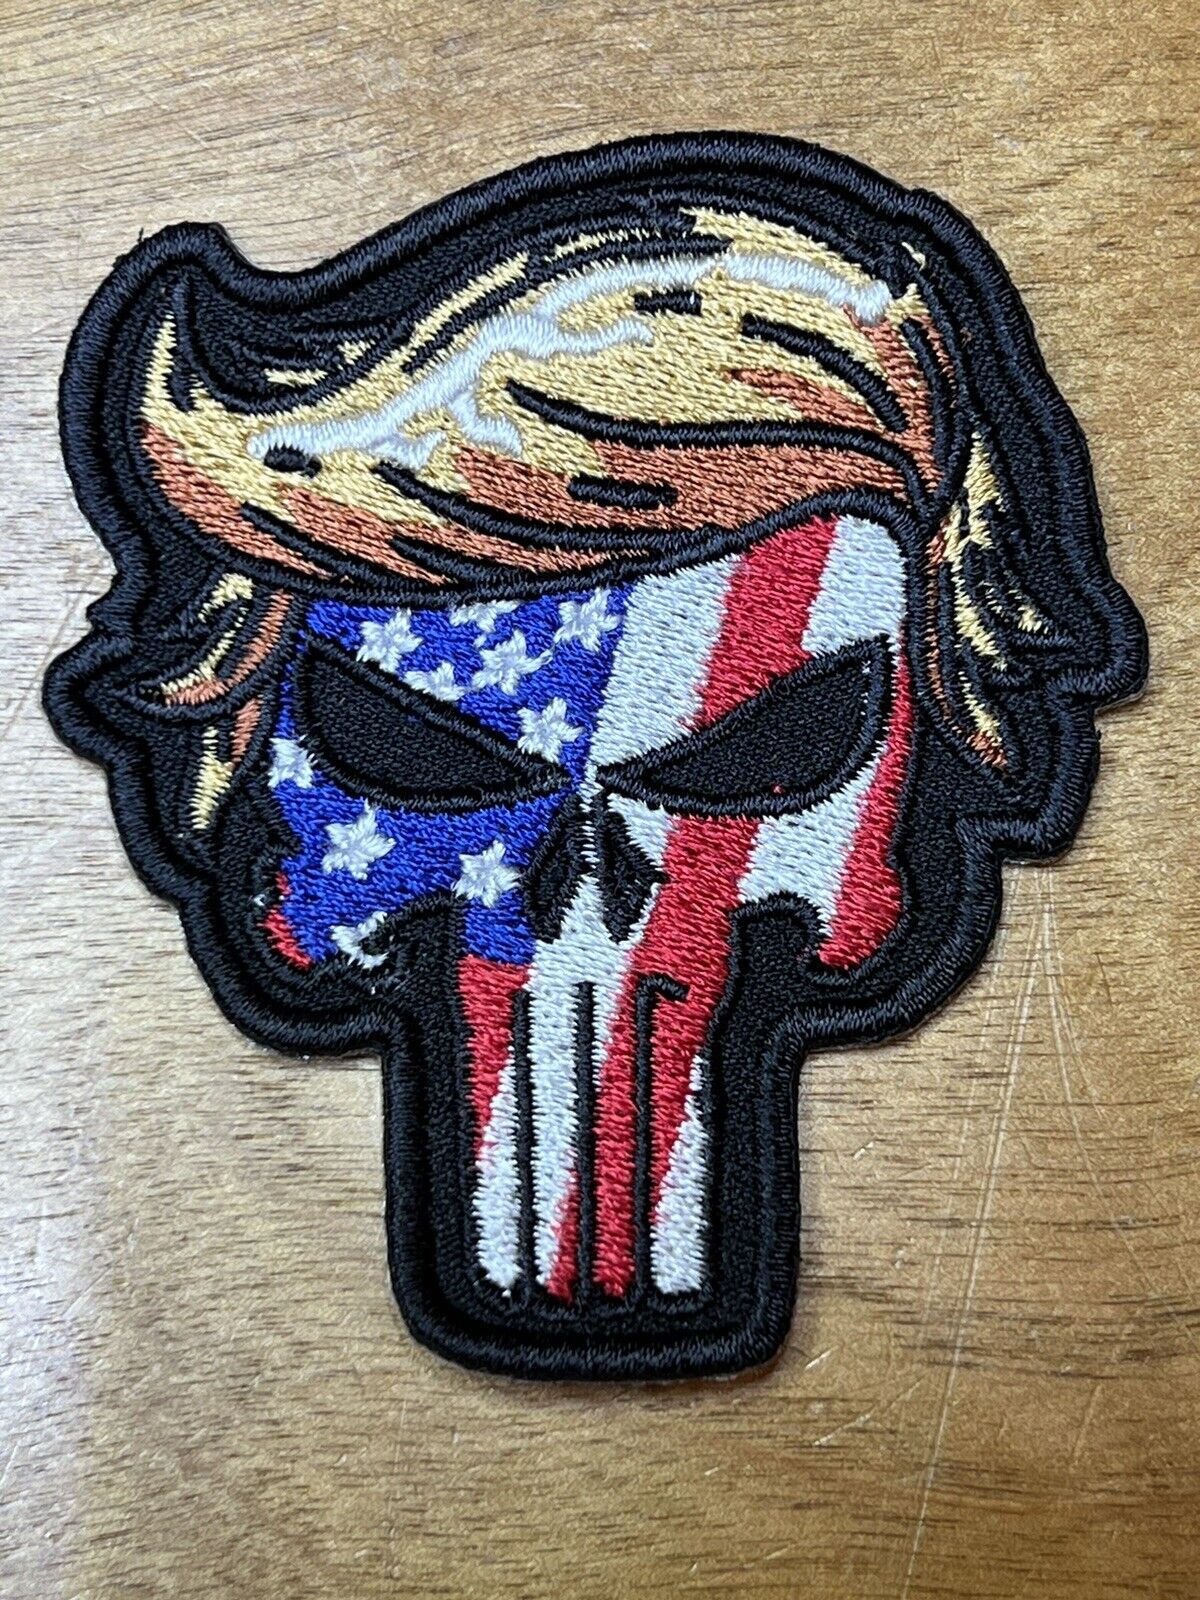 Trump Punisher Custom Original Embroidered Patch